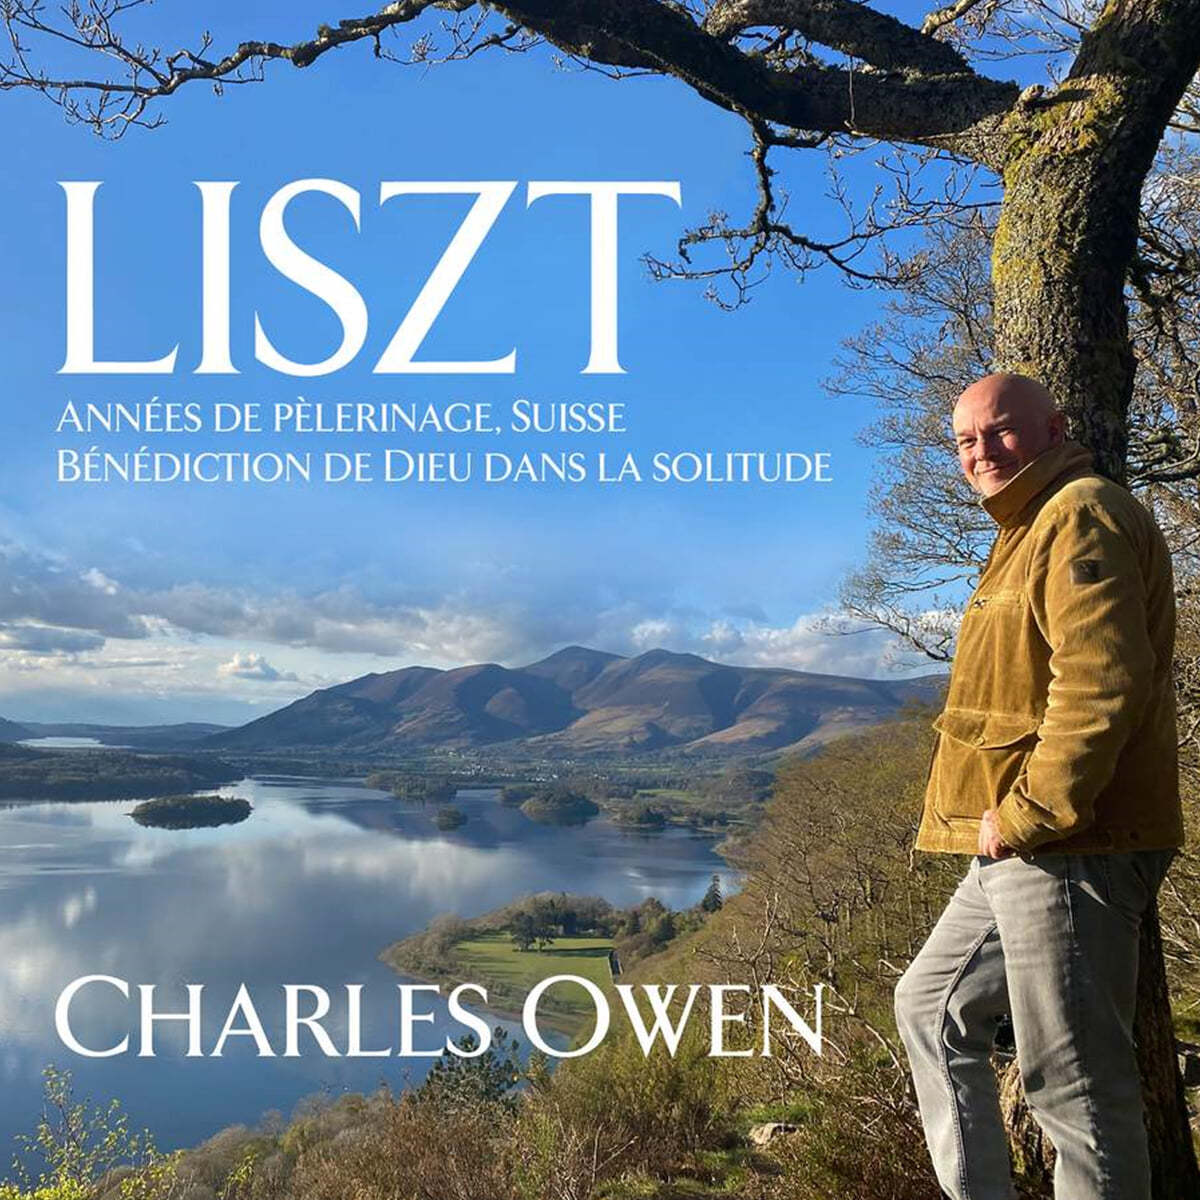 Charles Owen 리스트: 순례의 해 1년 &#39;스위스&#39;, 고독한 가운데 신의 축복 (Liszt: Annees de Pelerinage Premiere Annee - Suisse) 